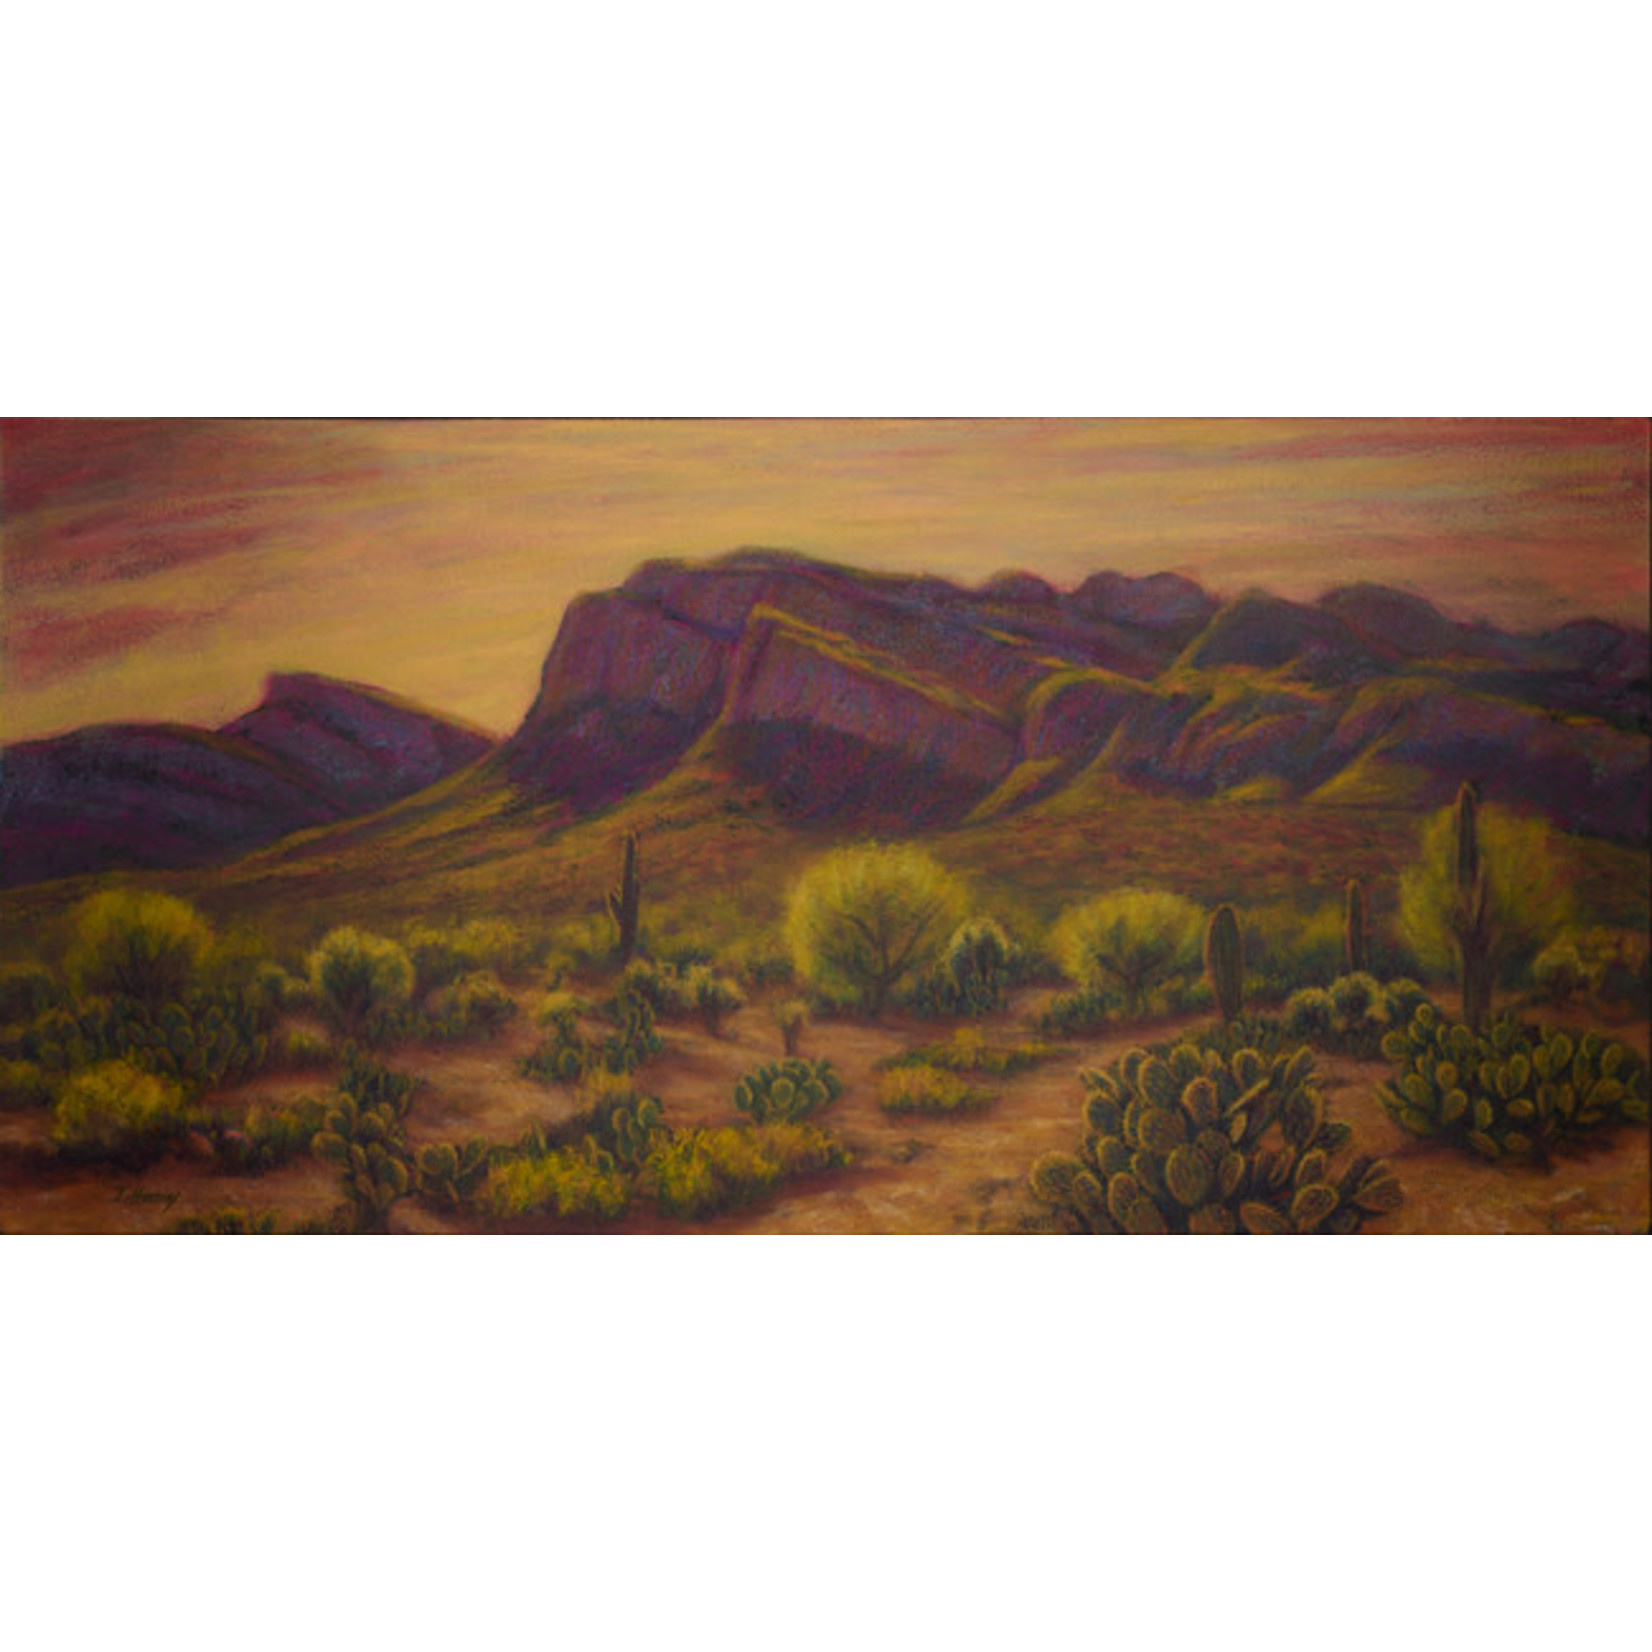 Joy Huckins-Noss "LINDA VISTA" 20x40 Oil Painting